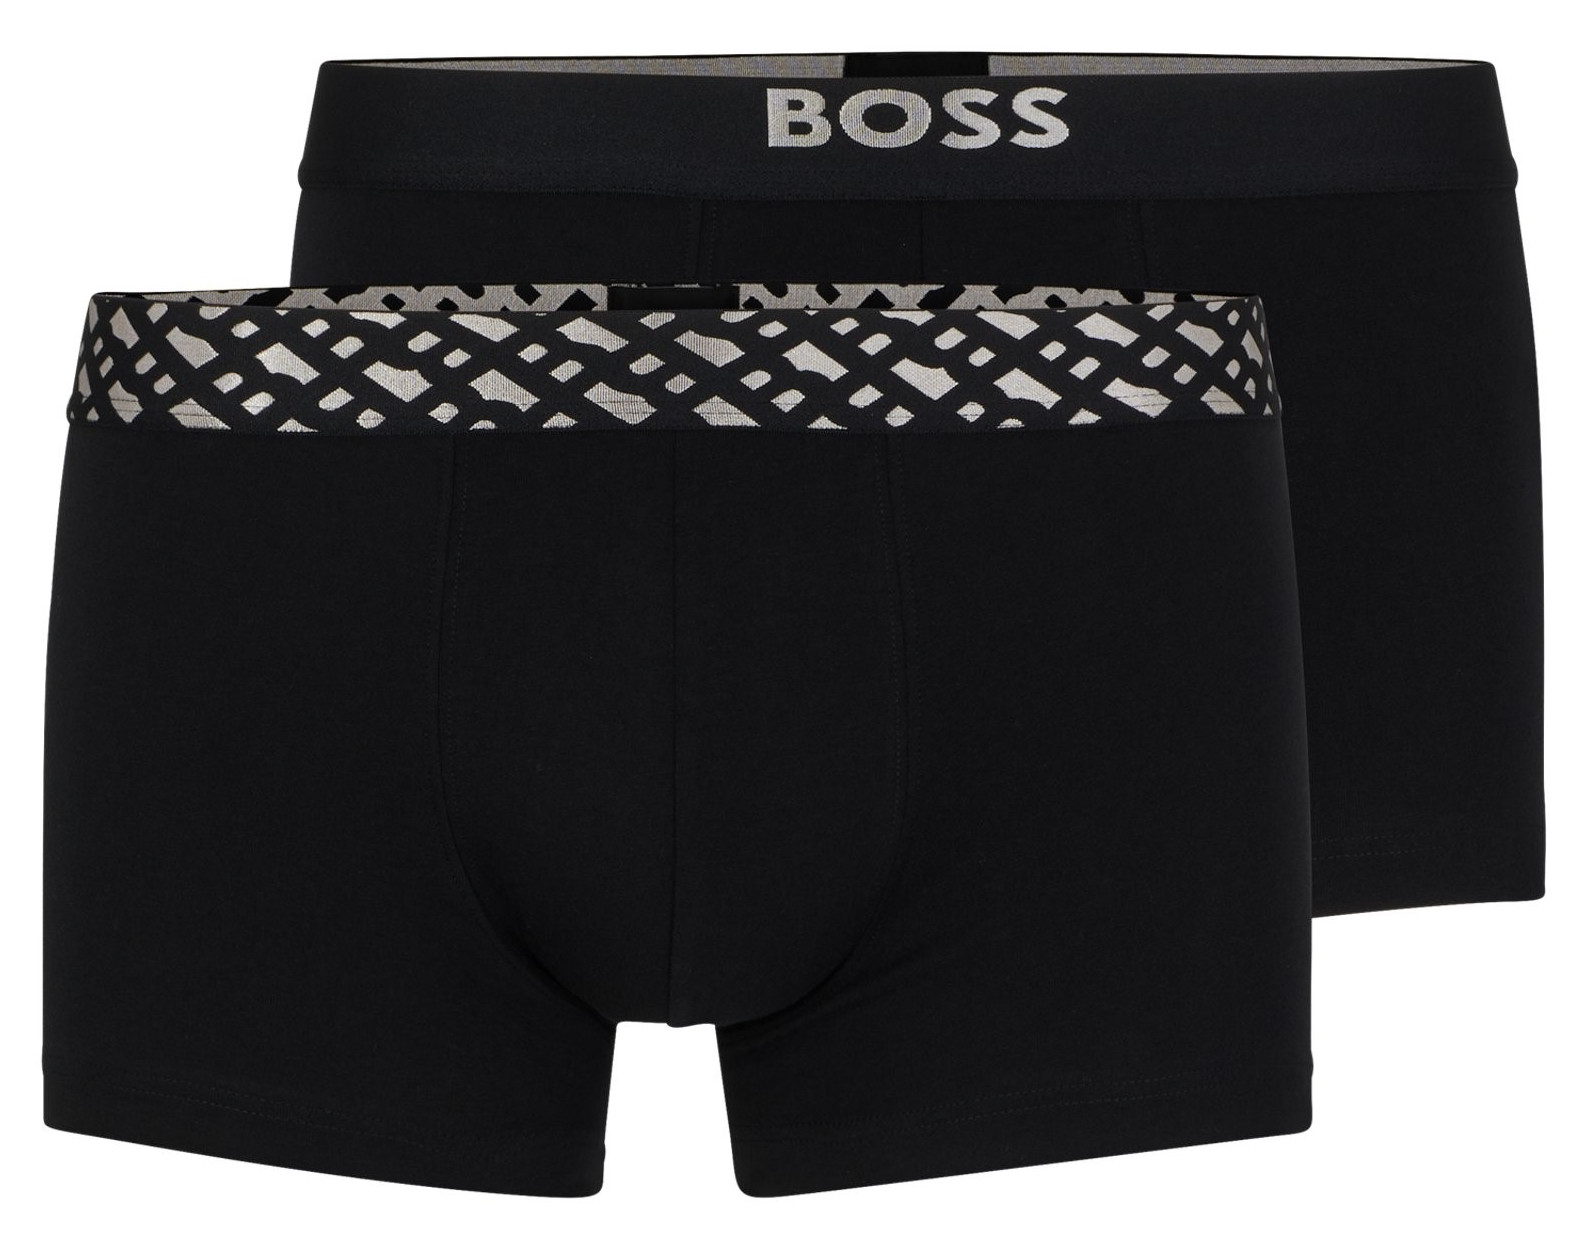 Hugo Boss 2 PACK - pánské boxerky BOSS 50499823-001 XL